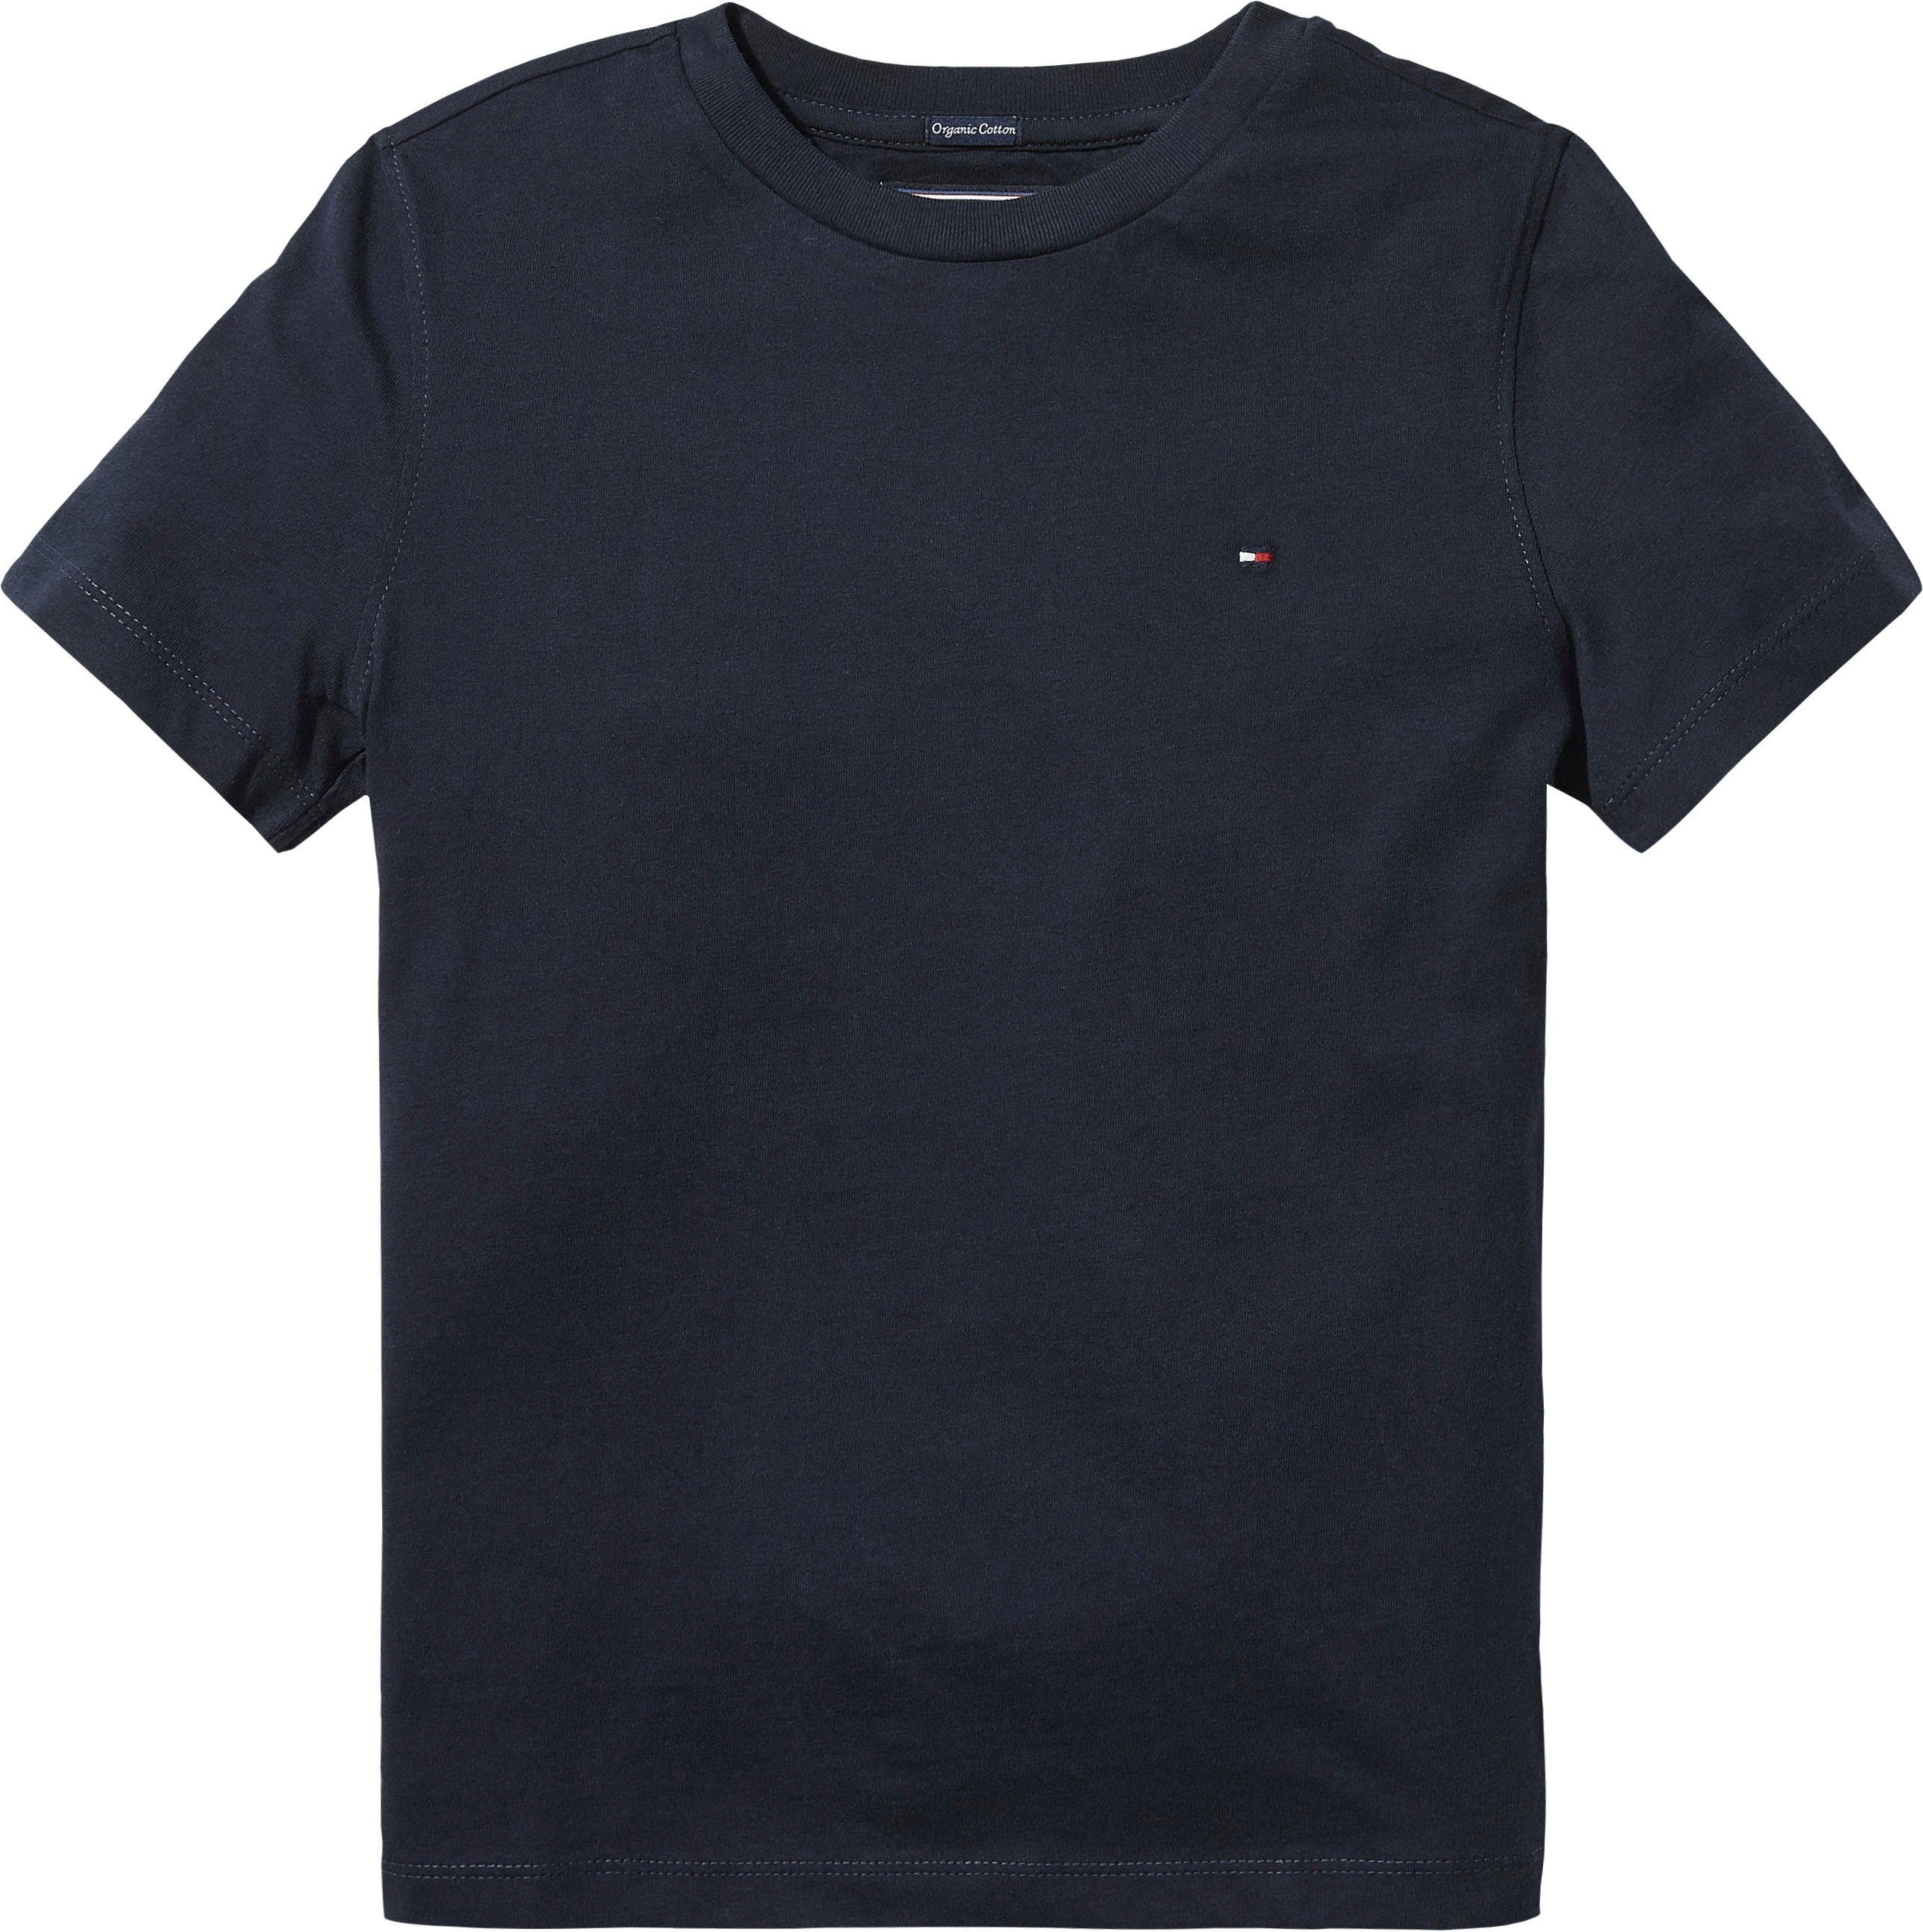 BOYS Hilfiger BASIC CN Tommy KNIT T-Shirt